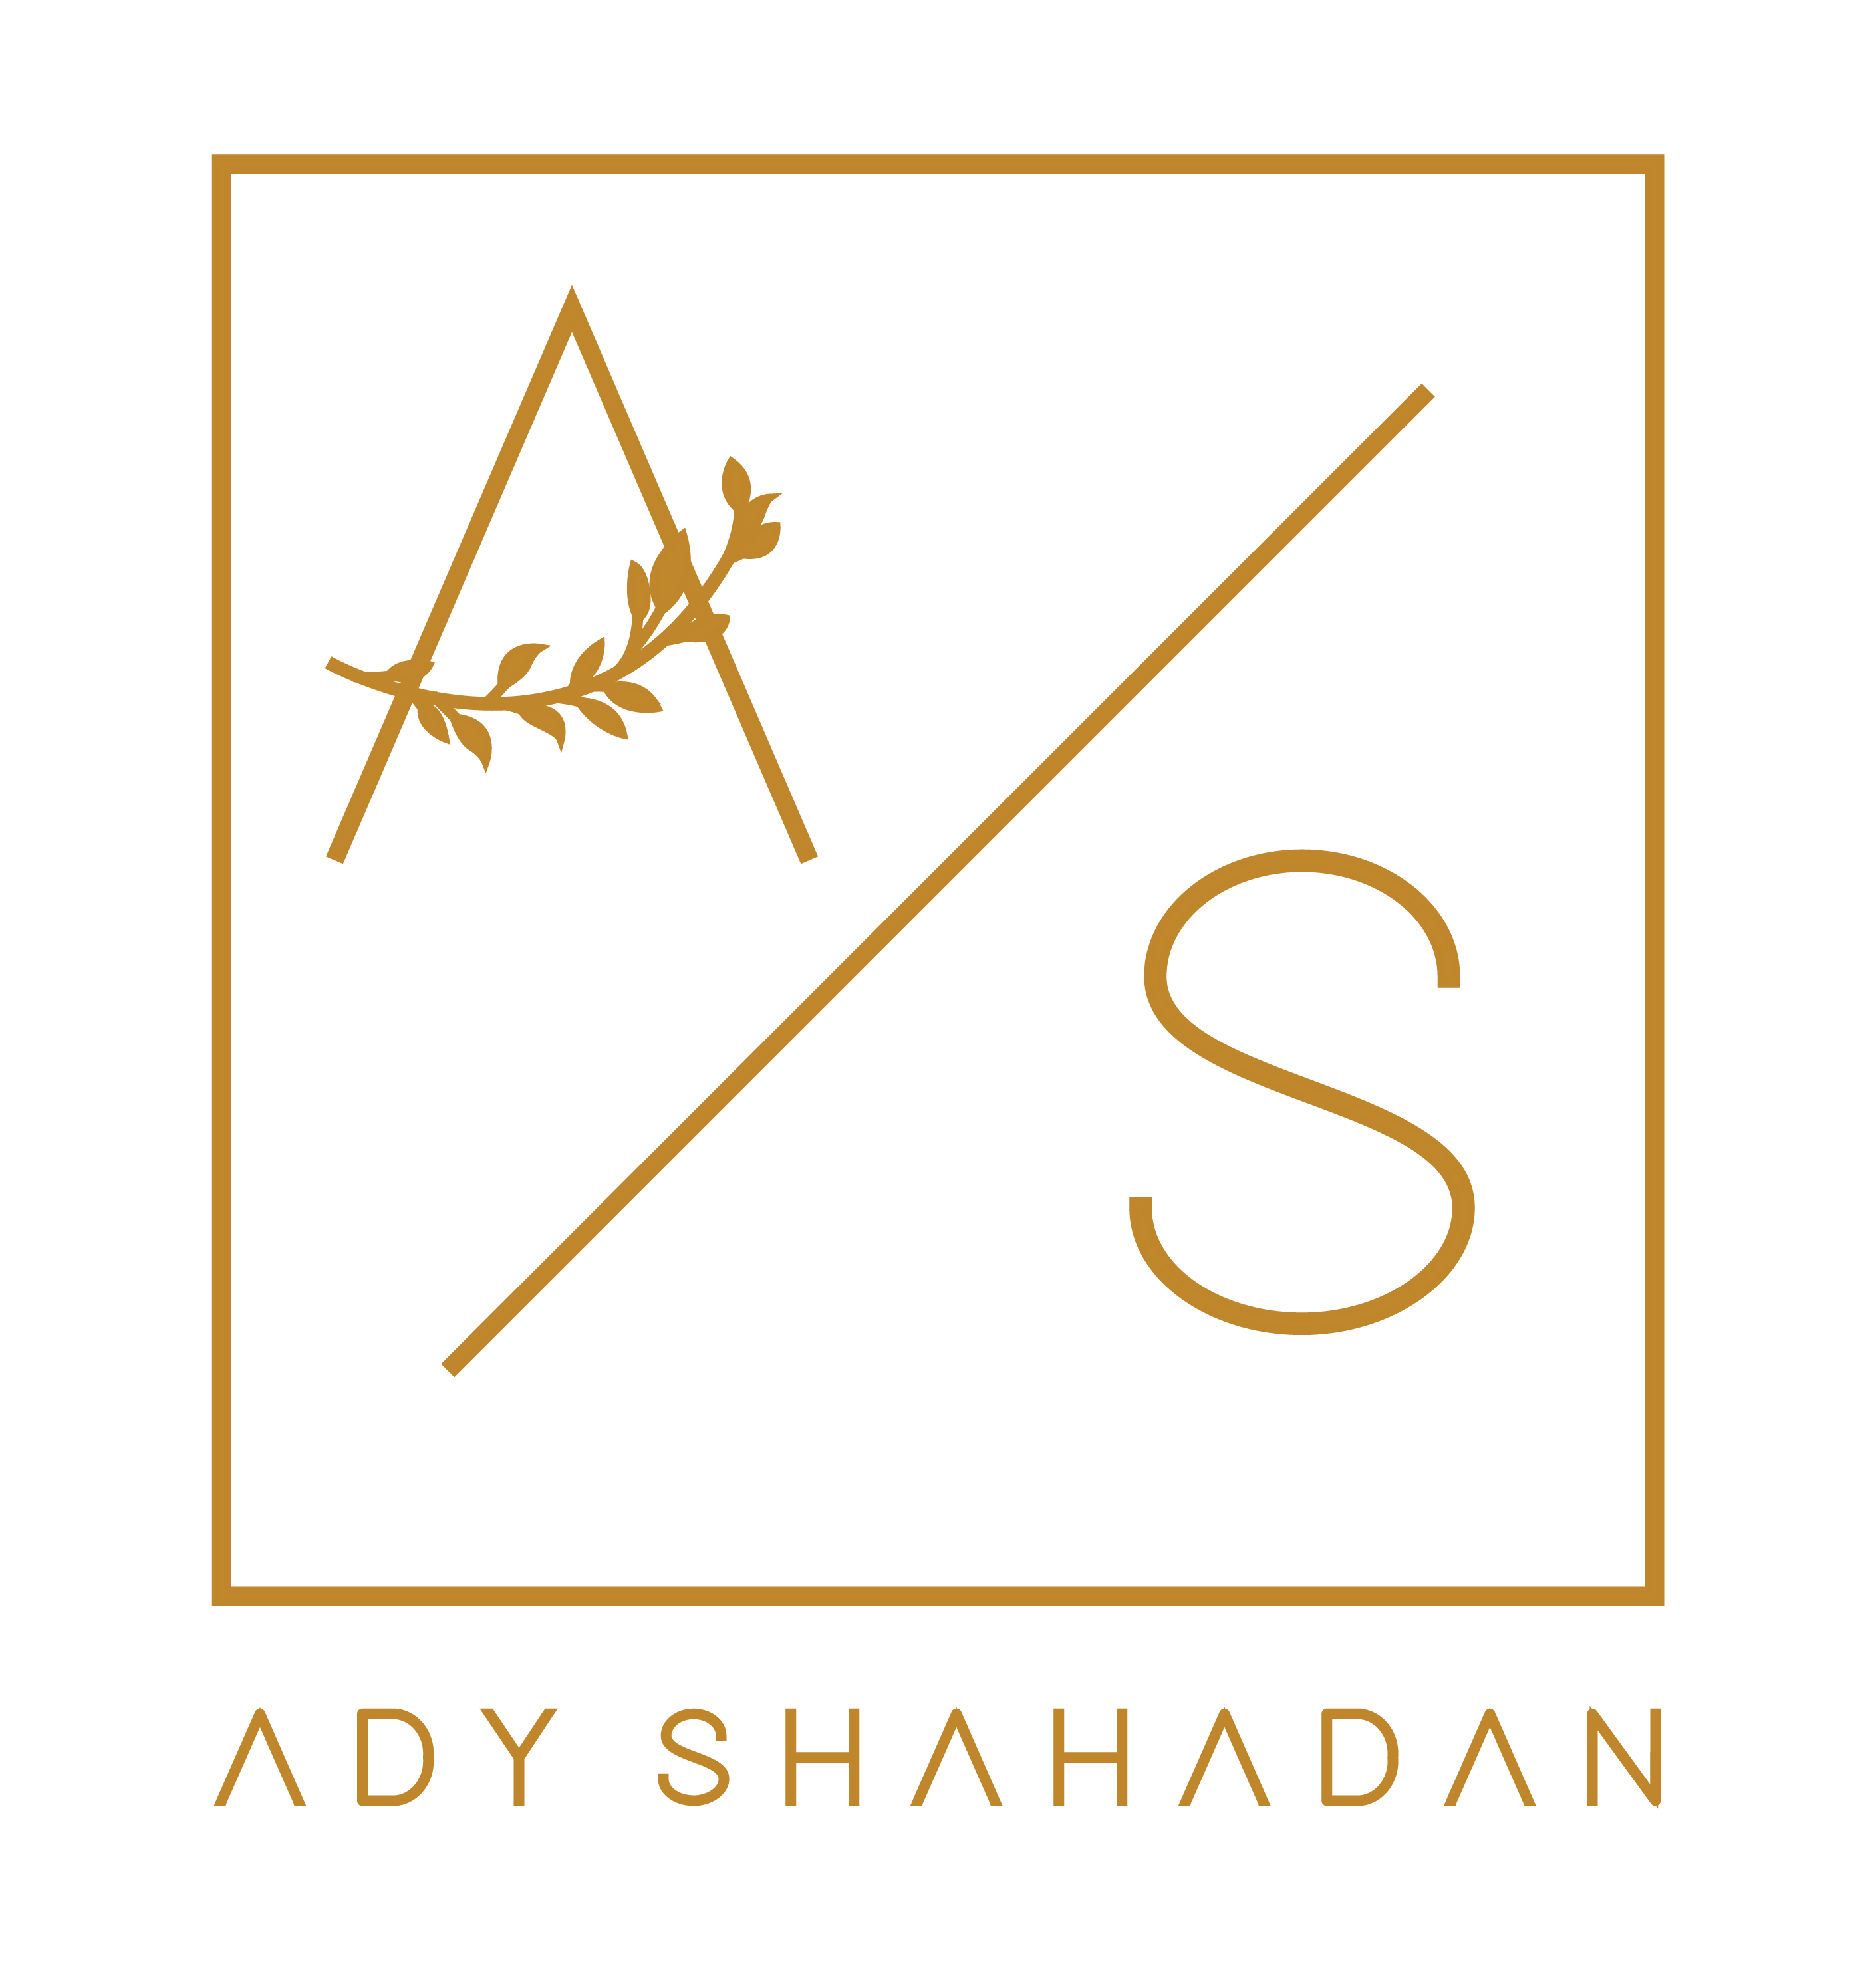 Ady Shahadan